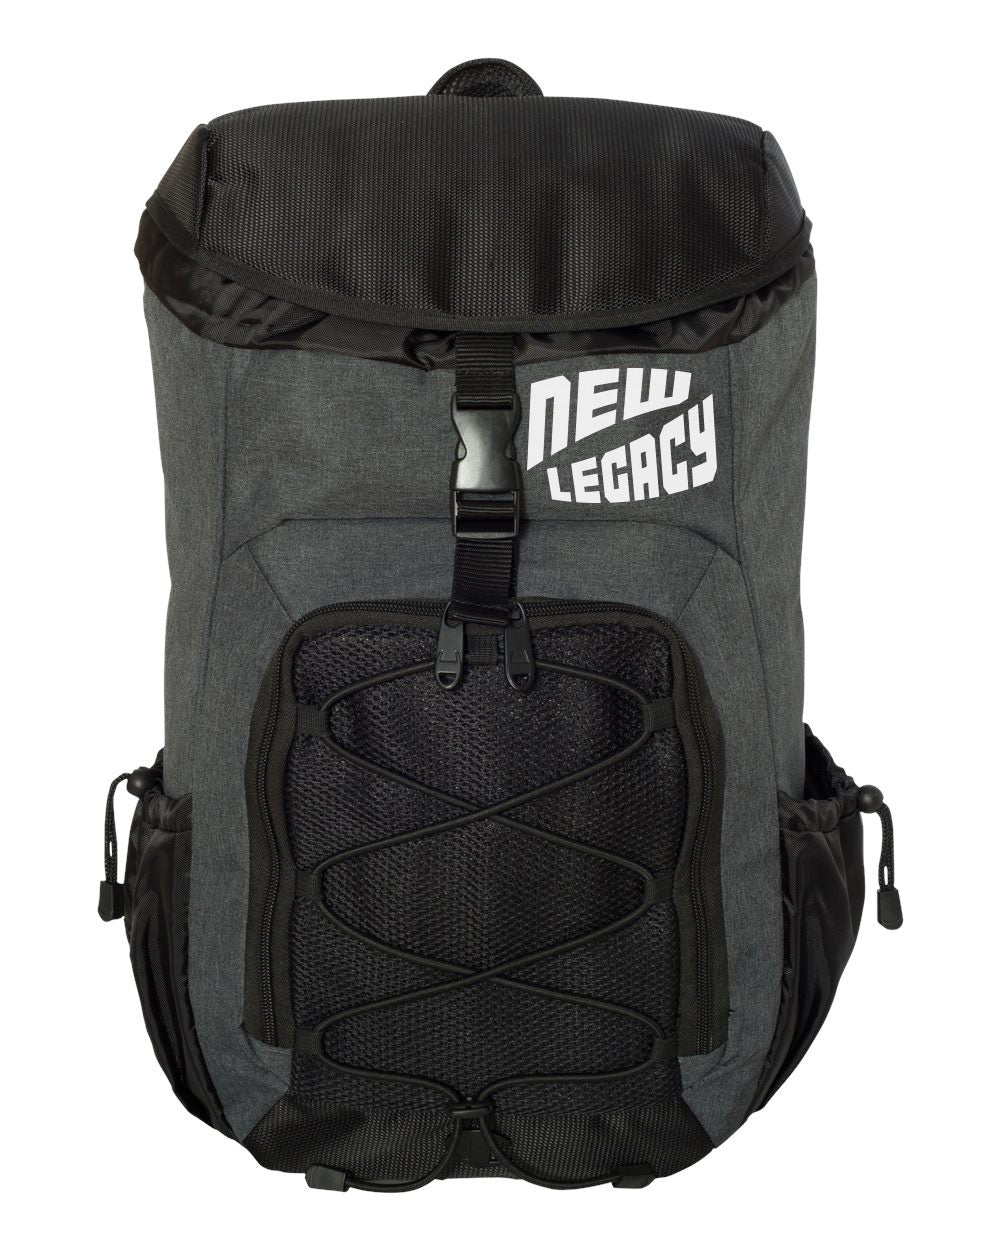 New Legacy Backpack